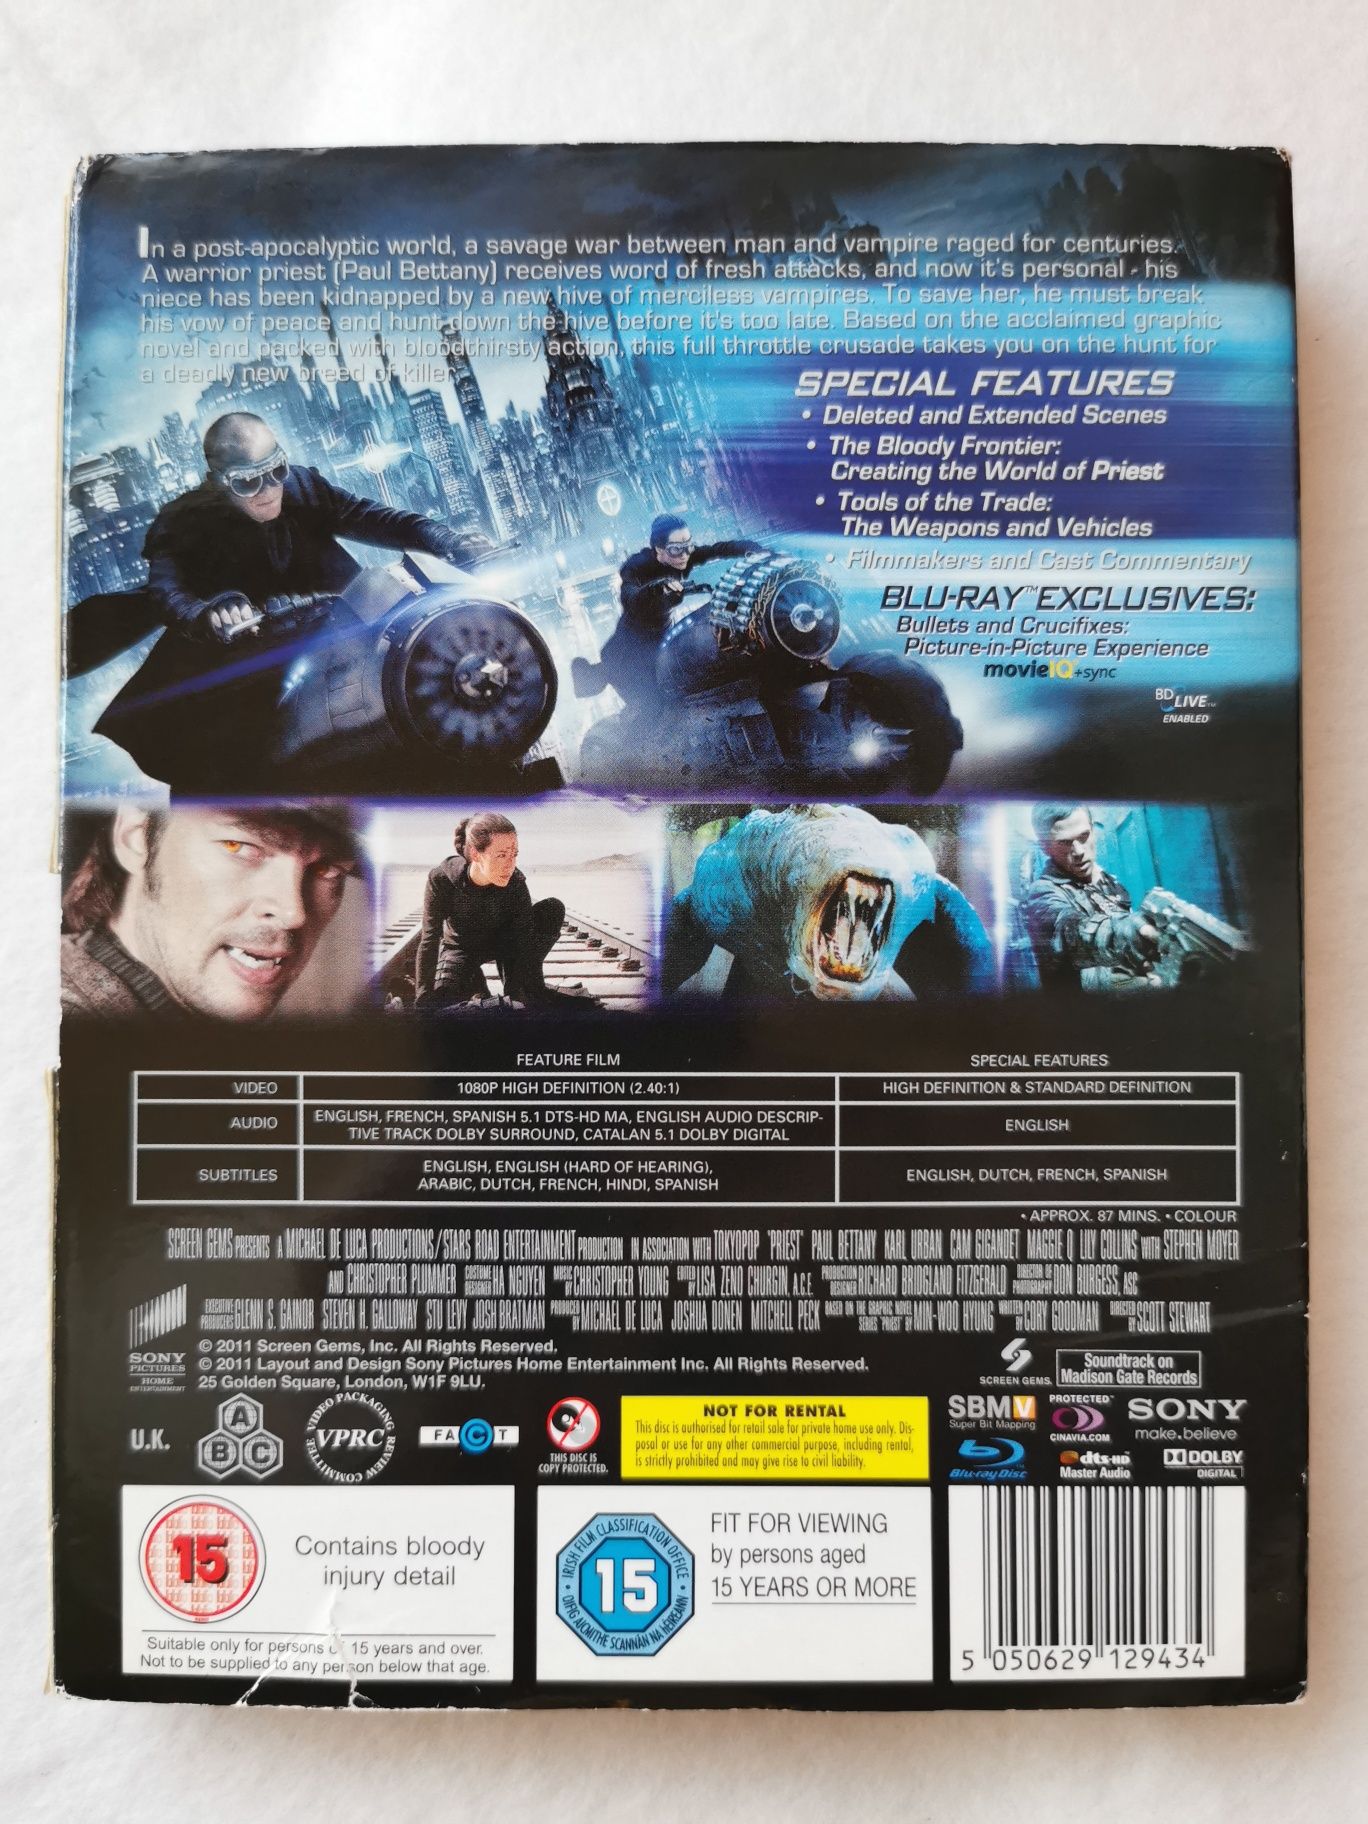 Priest (Ksiądz) Blu-ray (En) (2011) Bluray